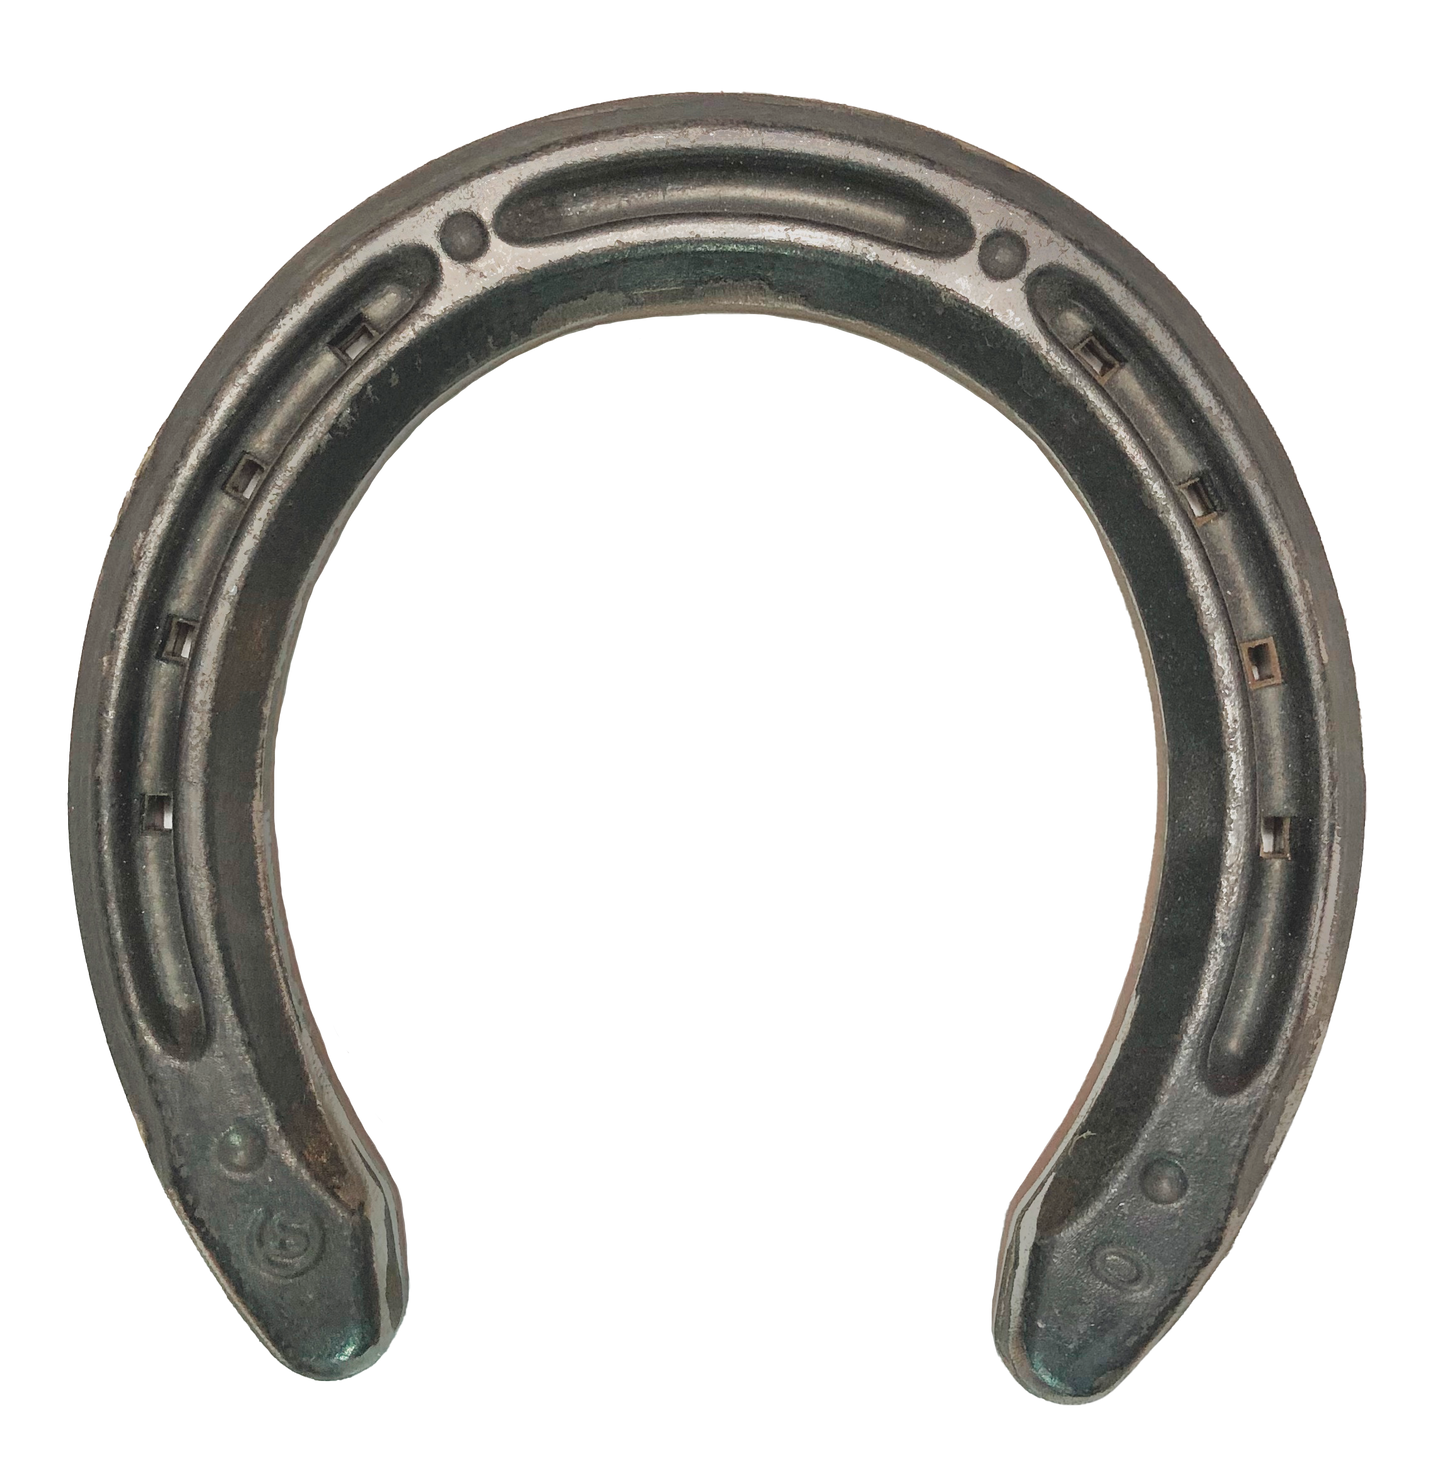 Quarter barrel forged shock absorbing horseshoes